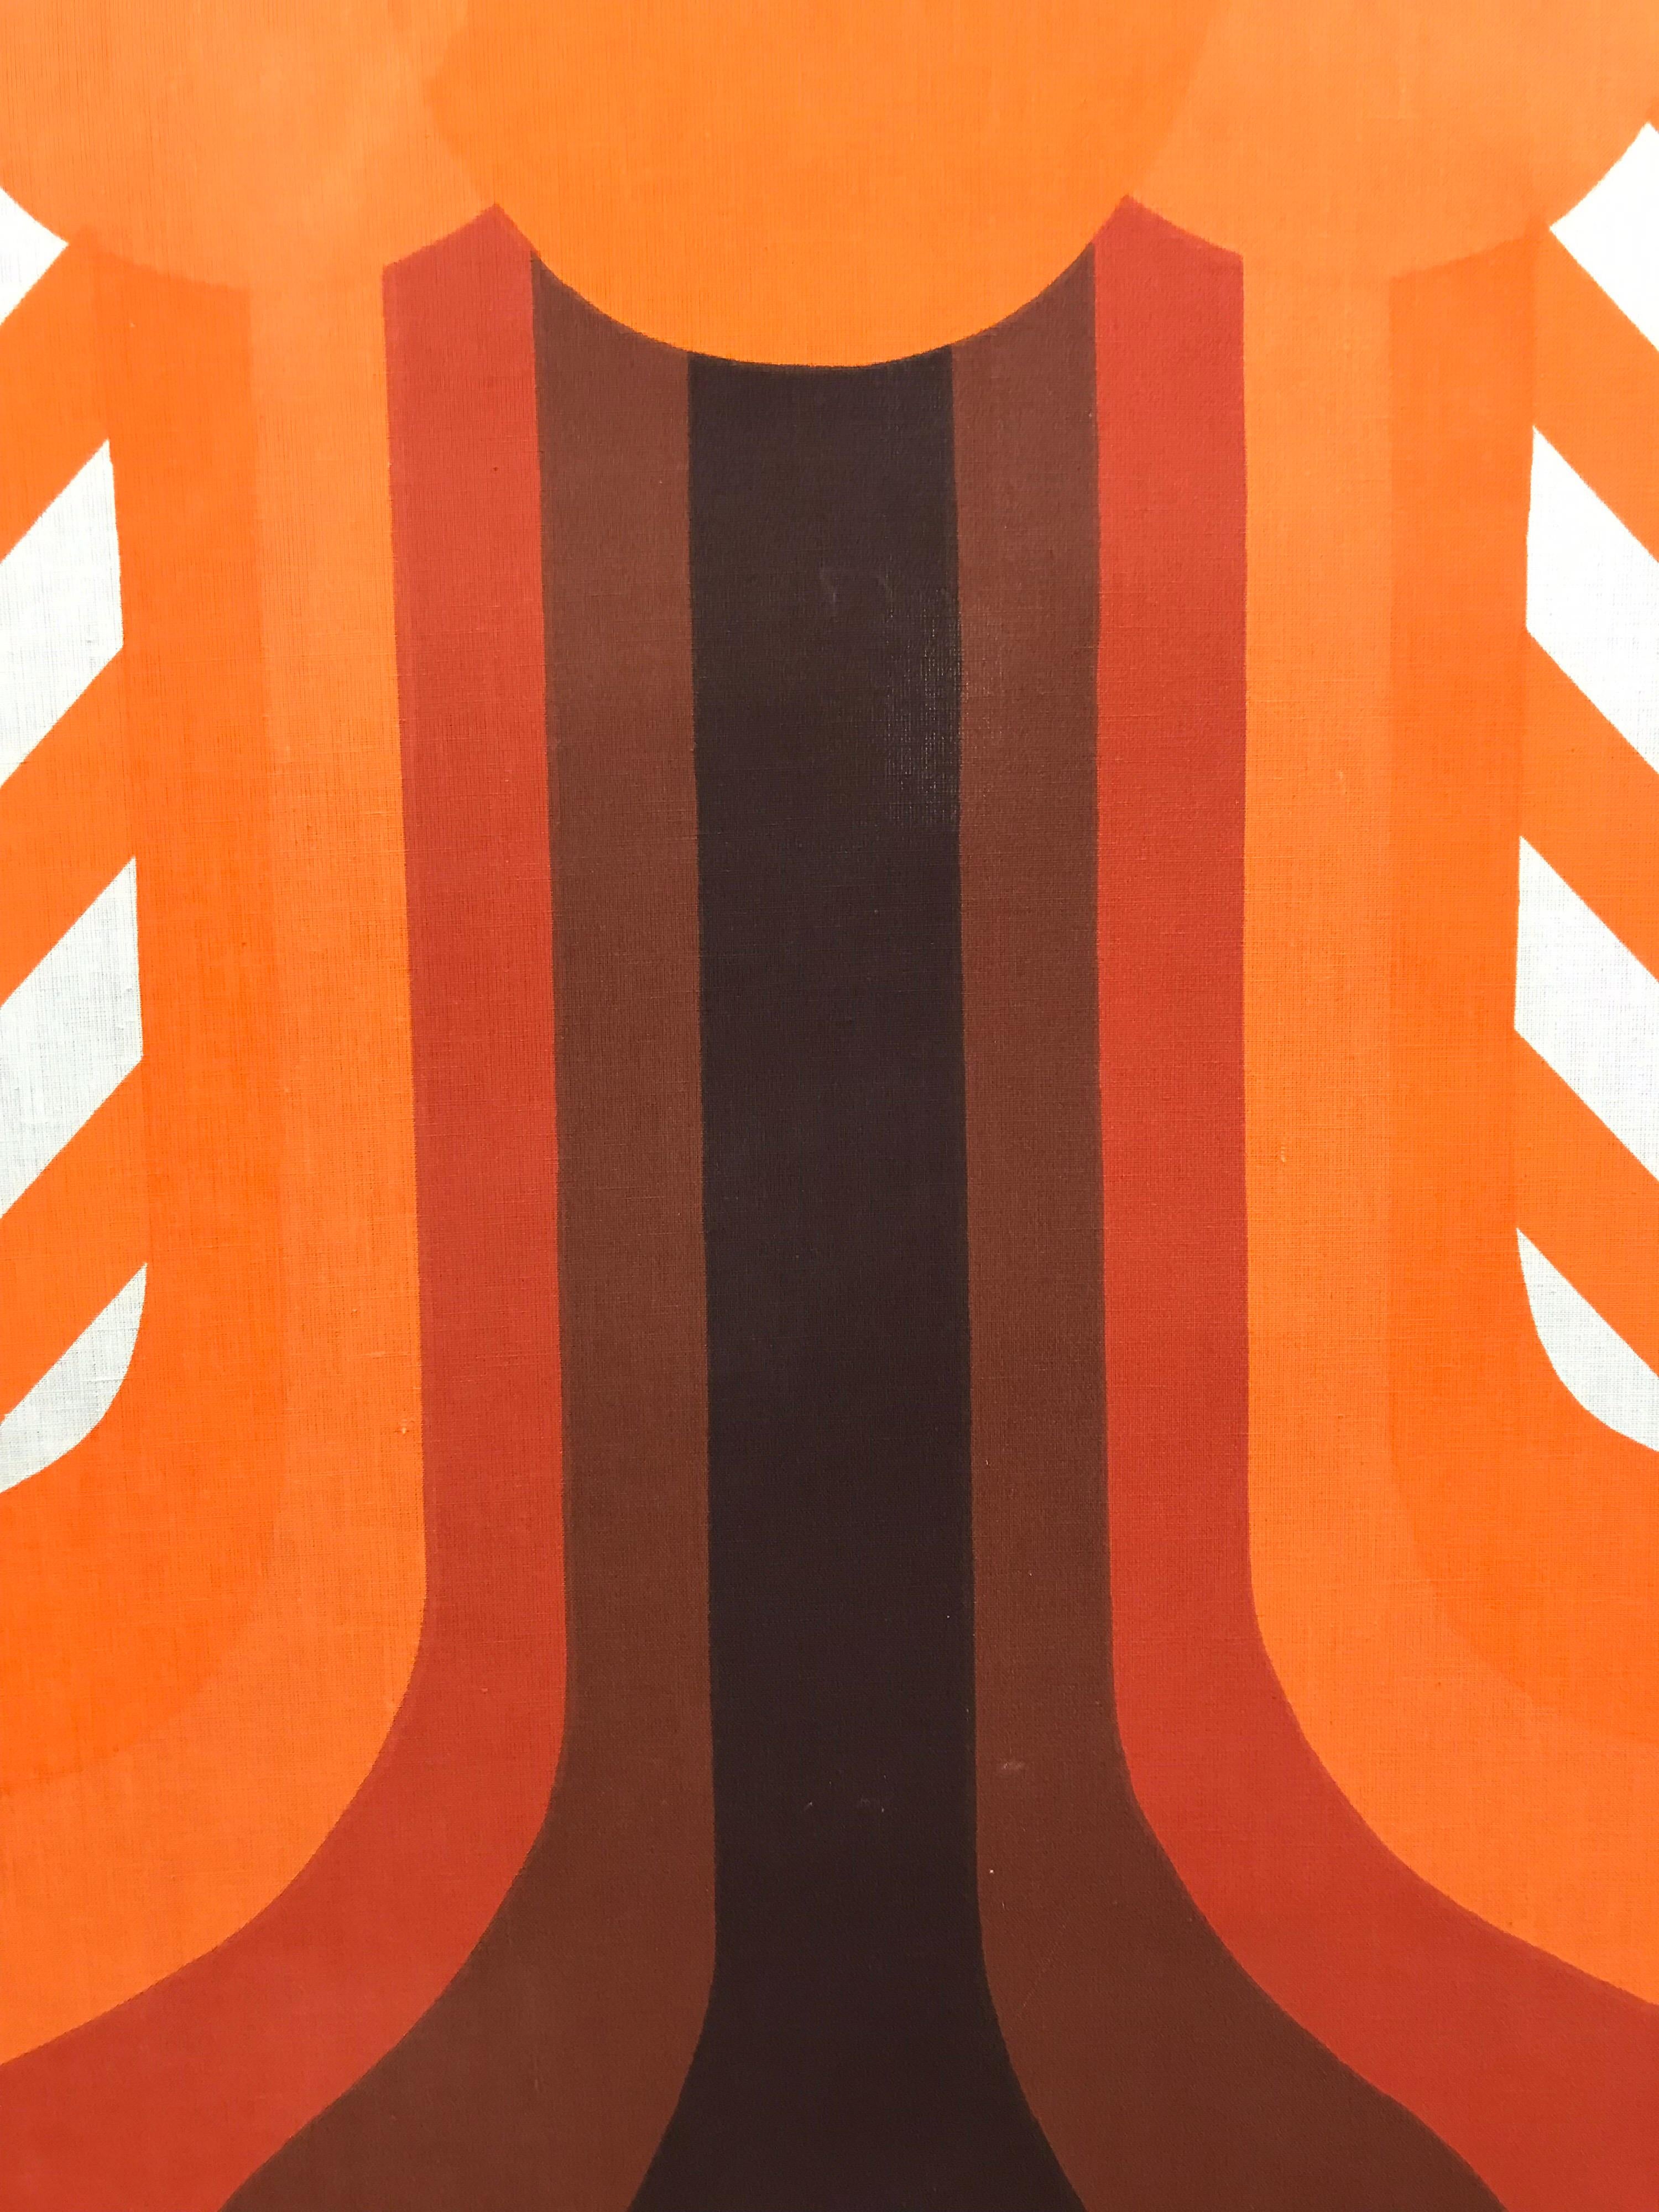 Late 20th Century Knoll Mid-Century Modern Graphic Orange Textile Fabric Wall Art, 1970s